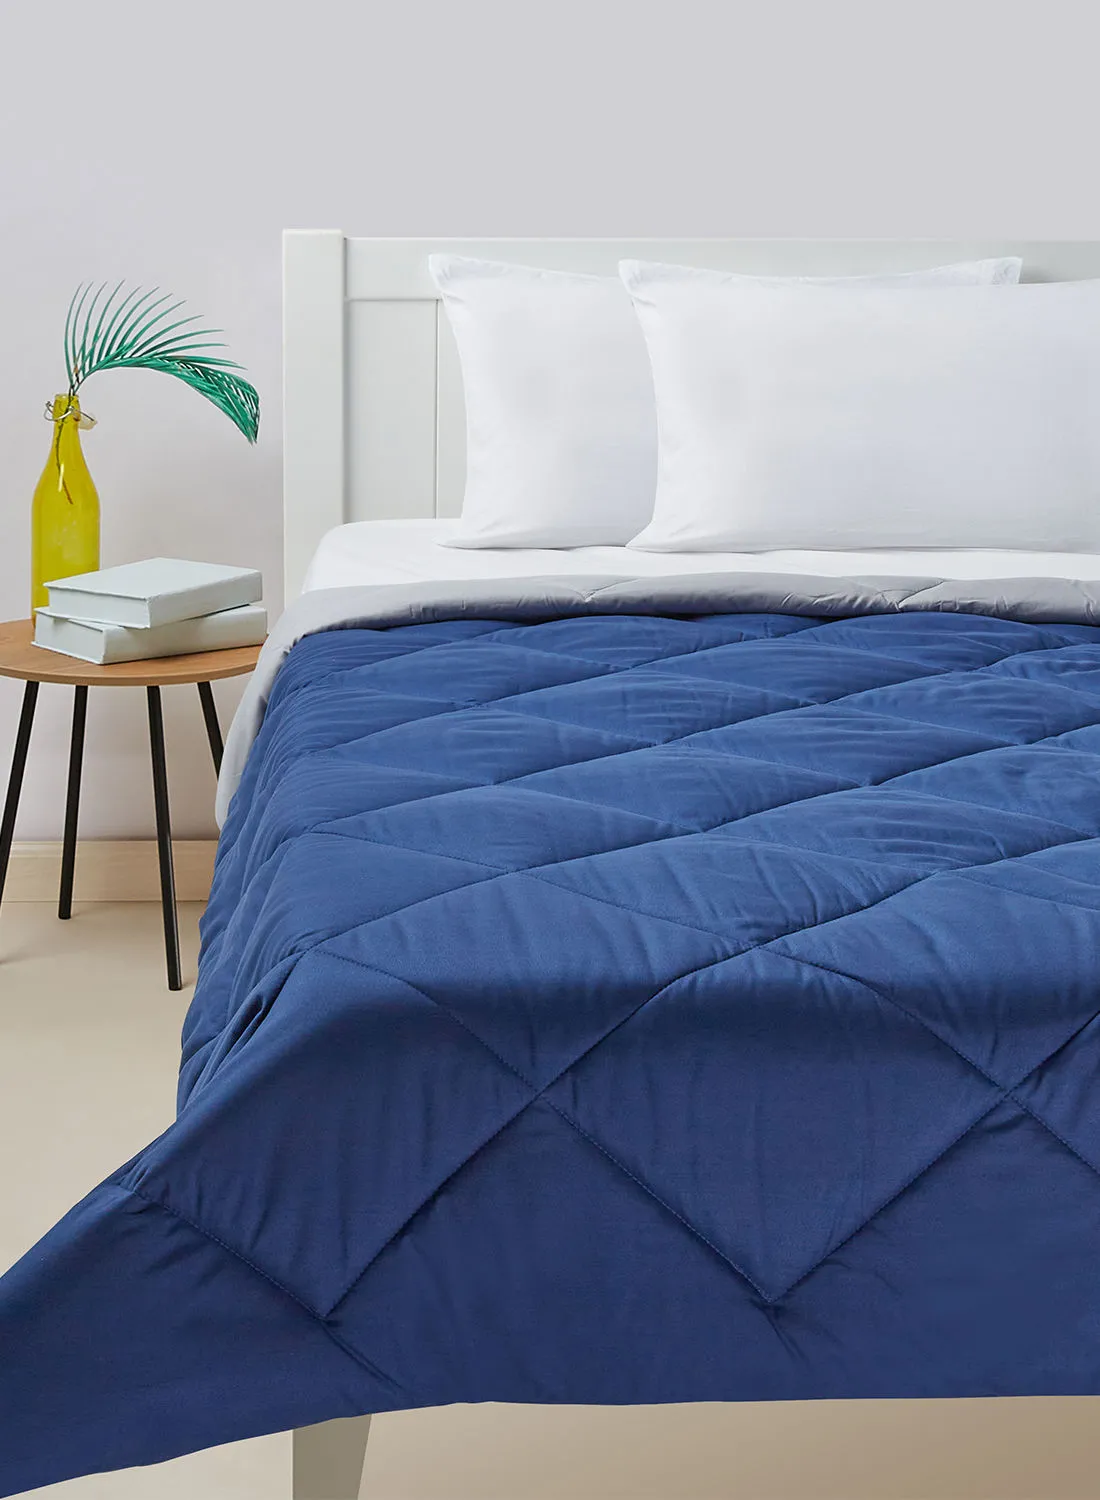 Amal Comforter King Size All Season Everyday Use Bedding Set Extra Soft Microfiber Single Piece Reversible Comforter   Navy/Silver Grey